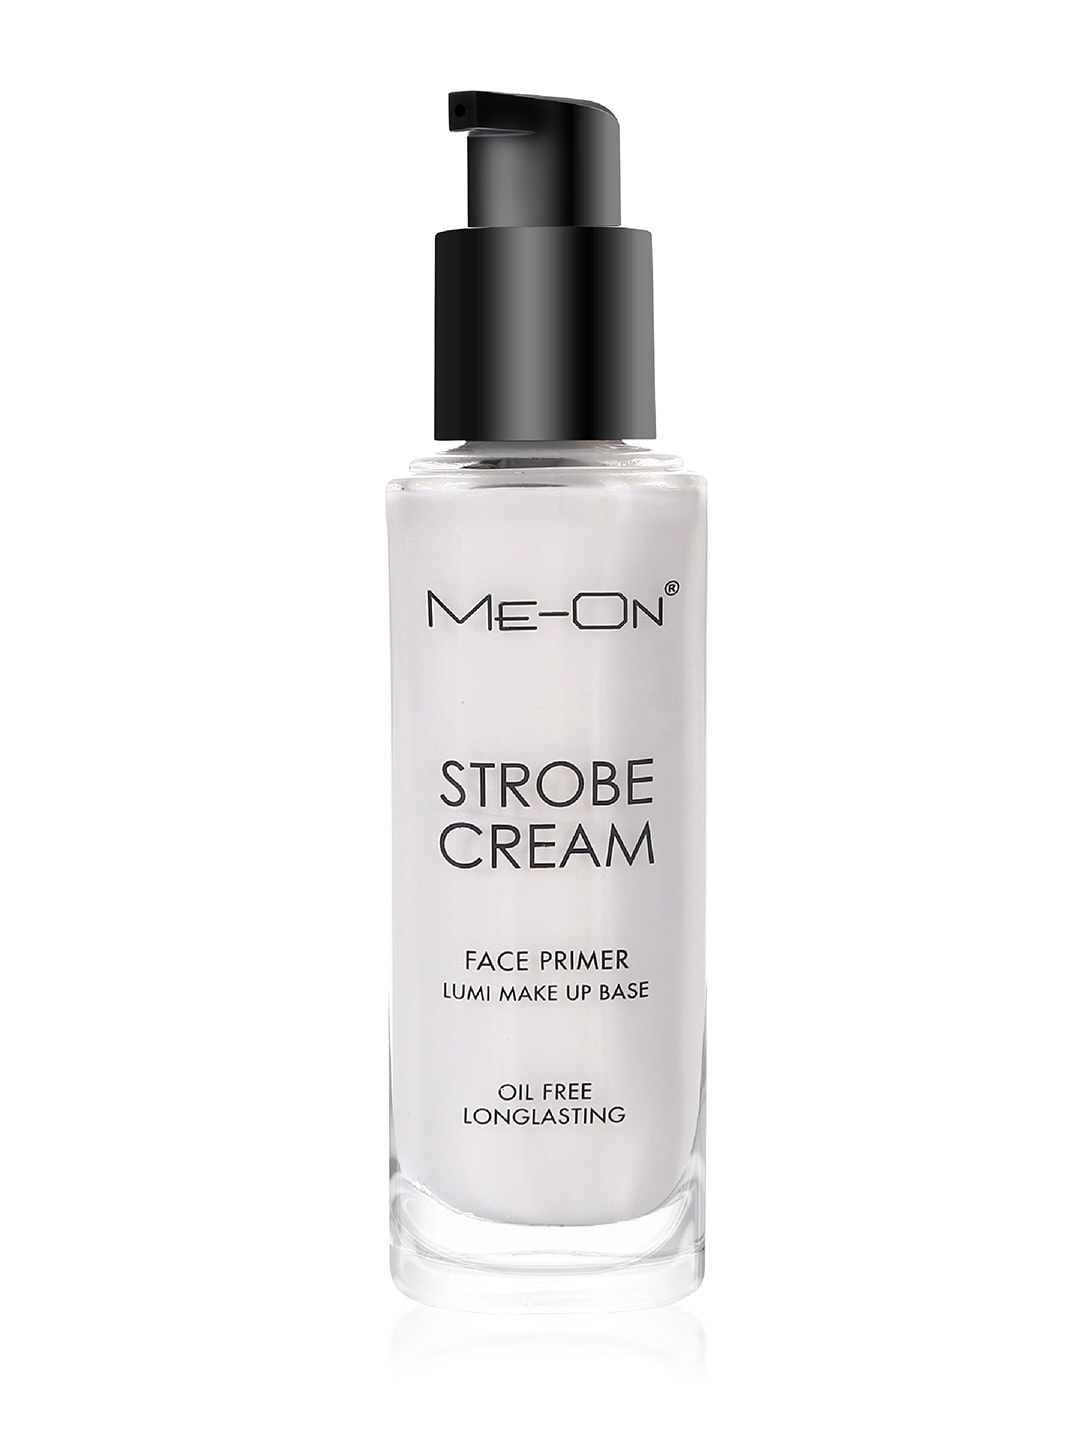 ME-ON Strobe Cream Oil Free & Long Lasting Primer 30 ml - Diamond White 02 Price in India